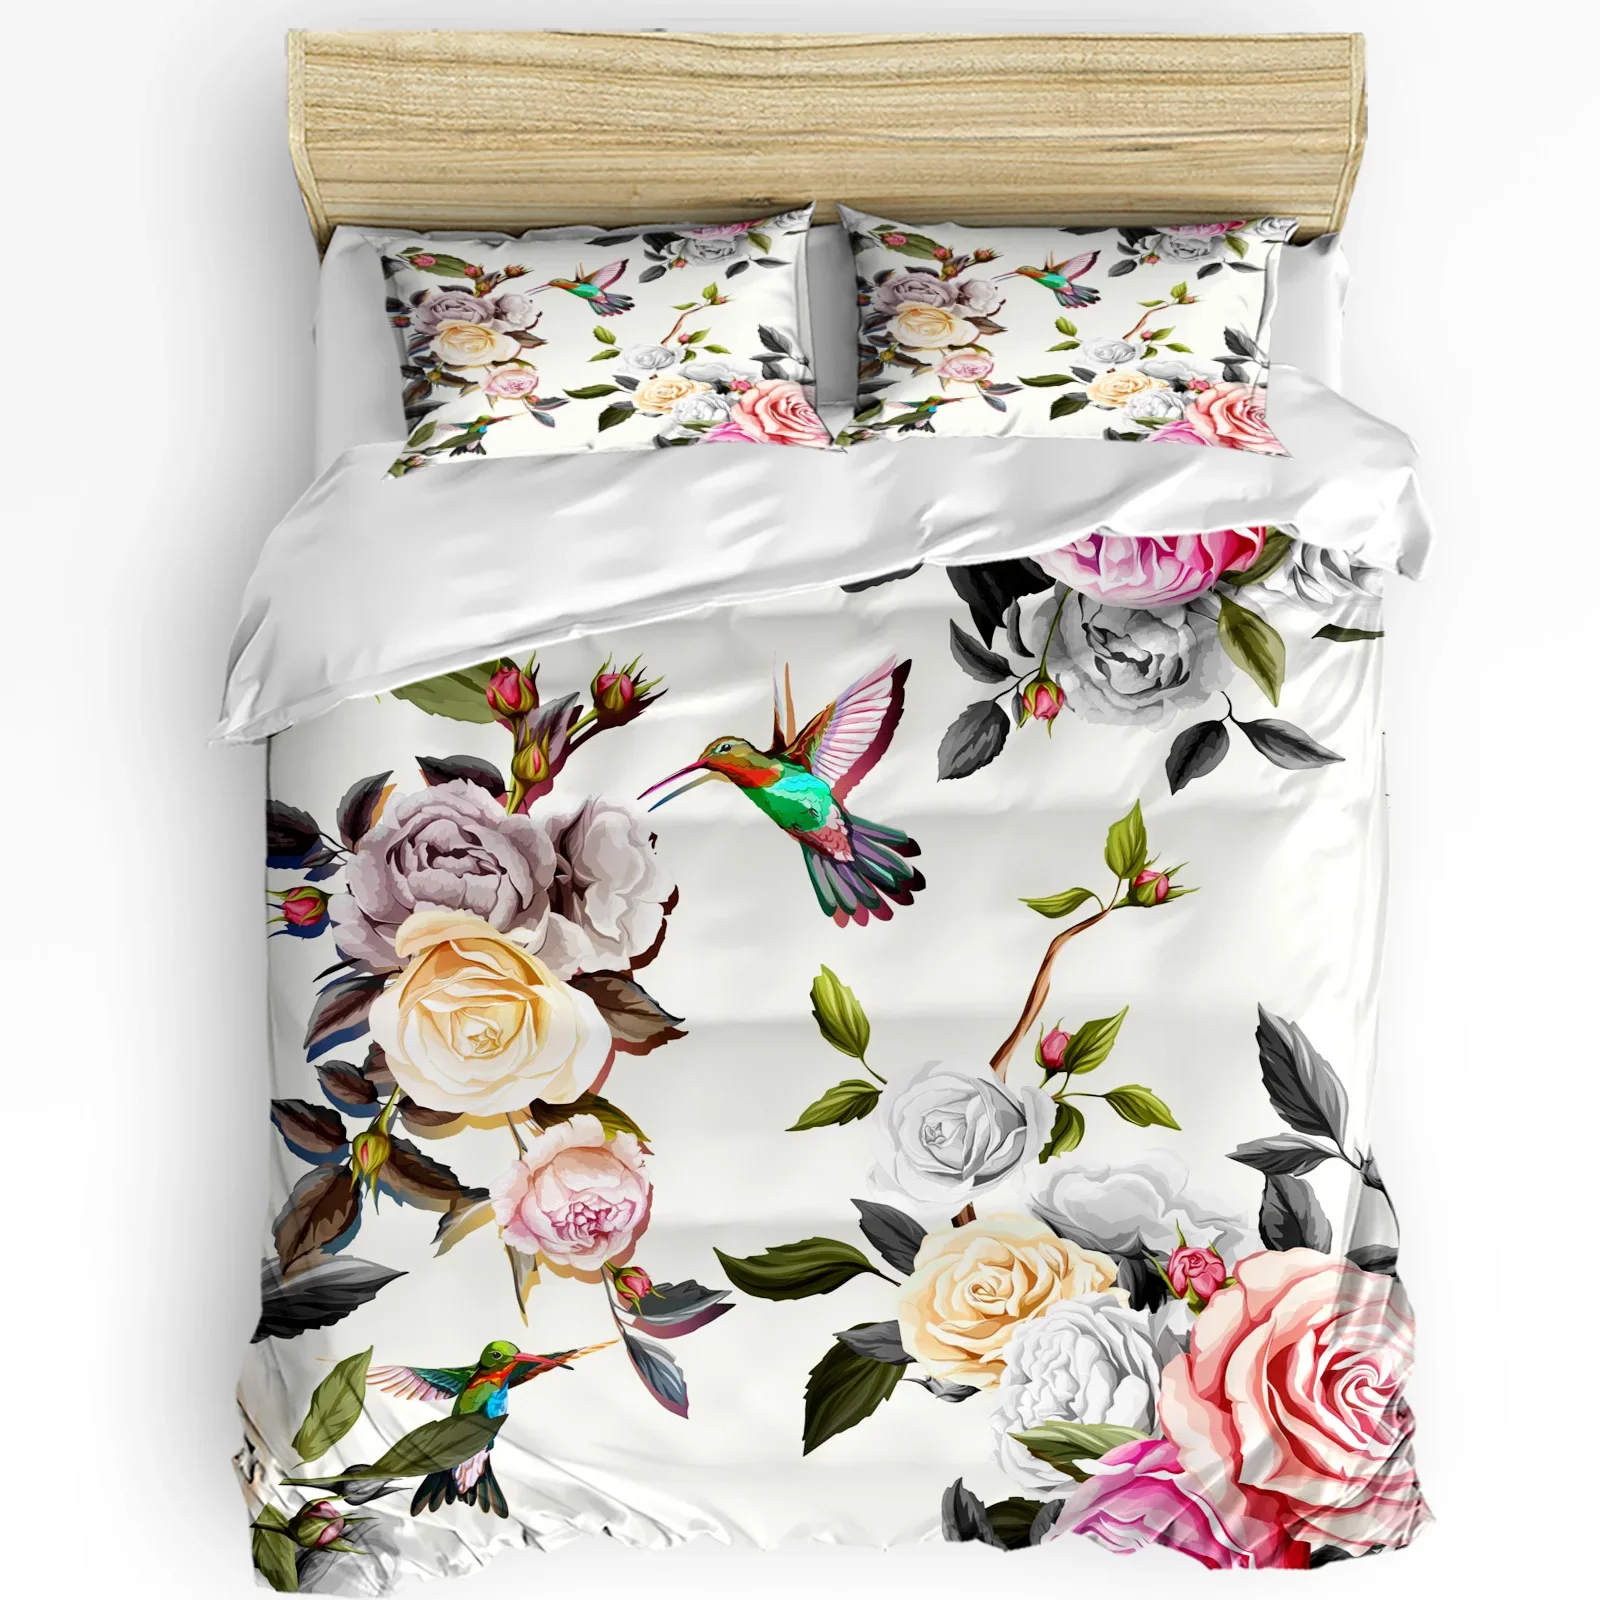 

Watercolour Rose Peony Bird Printed Comfort Duvet Cover Pillow Case Home Textile Quilt Cover Boy Kid Teen Girl 3pcs Bedding Set